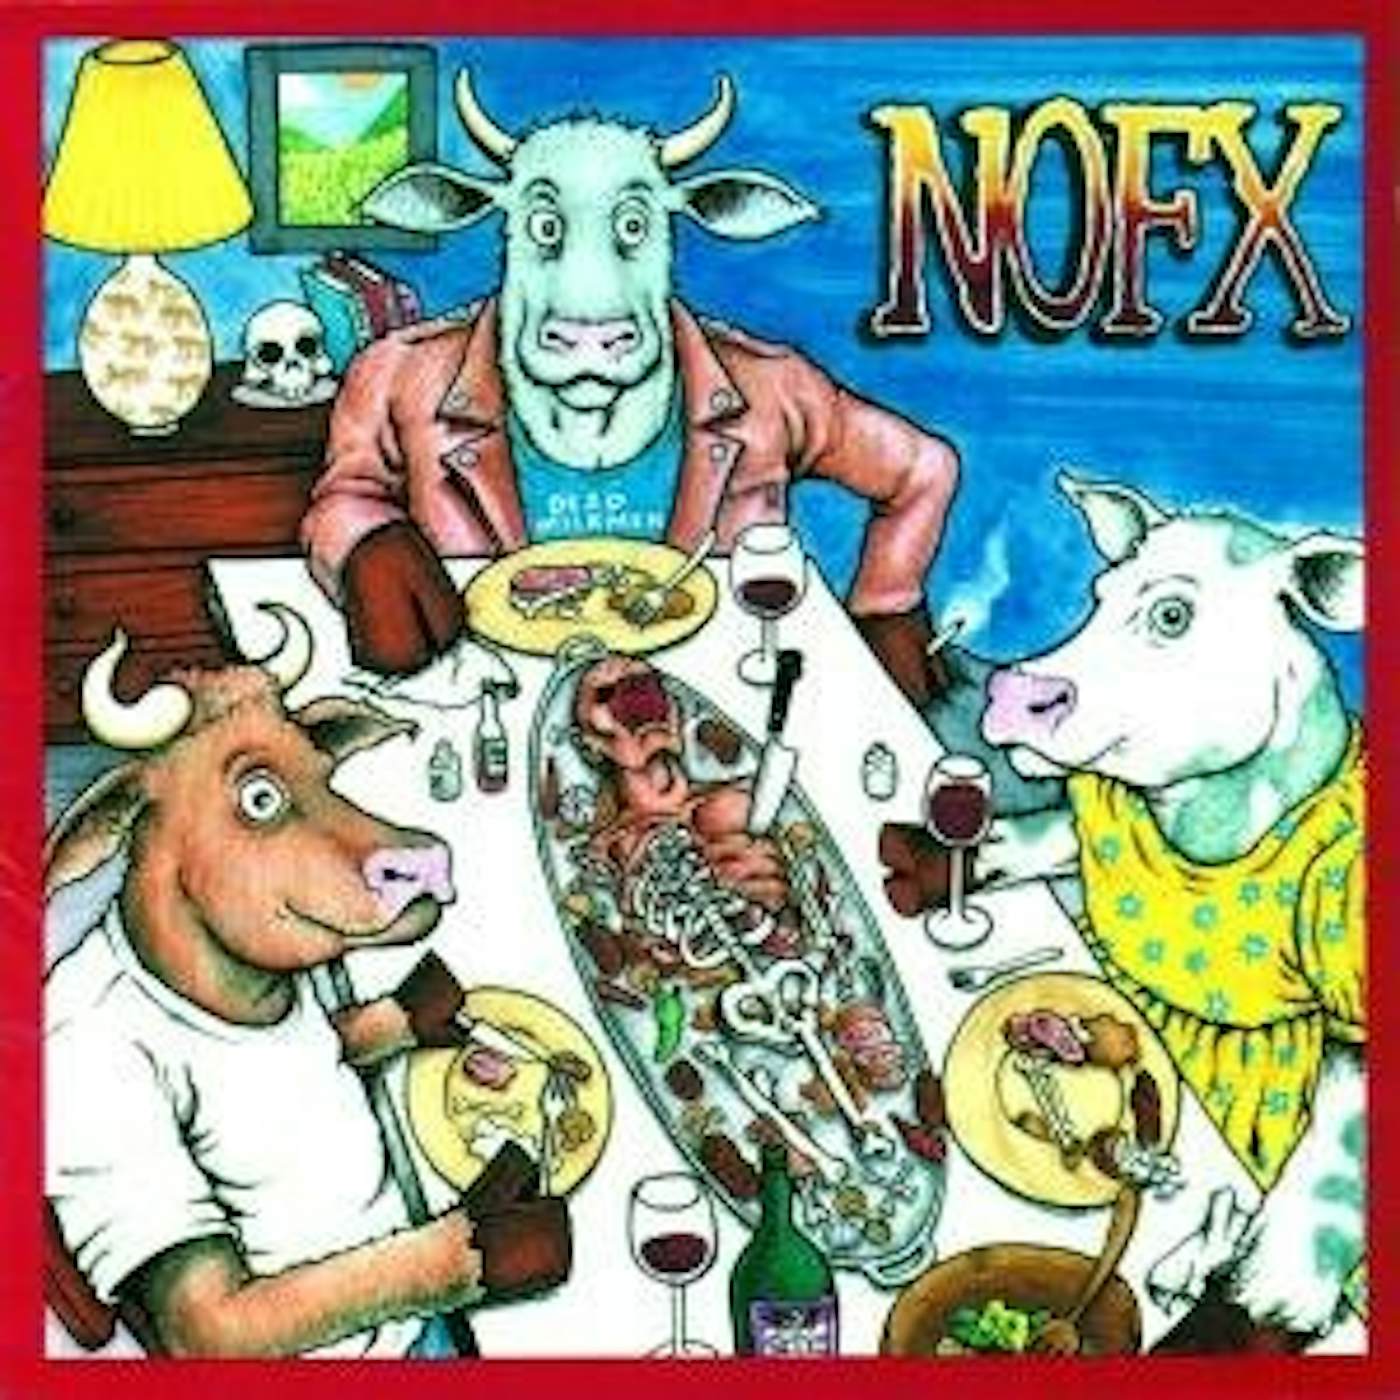 NOFX Liberal Animation Vinyl Record